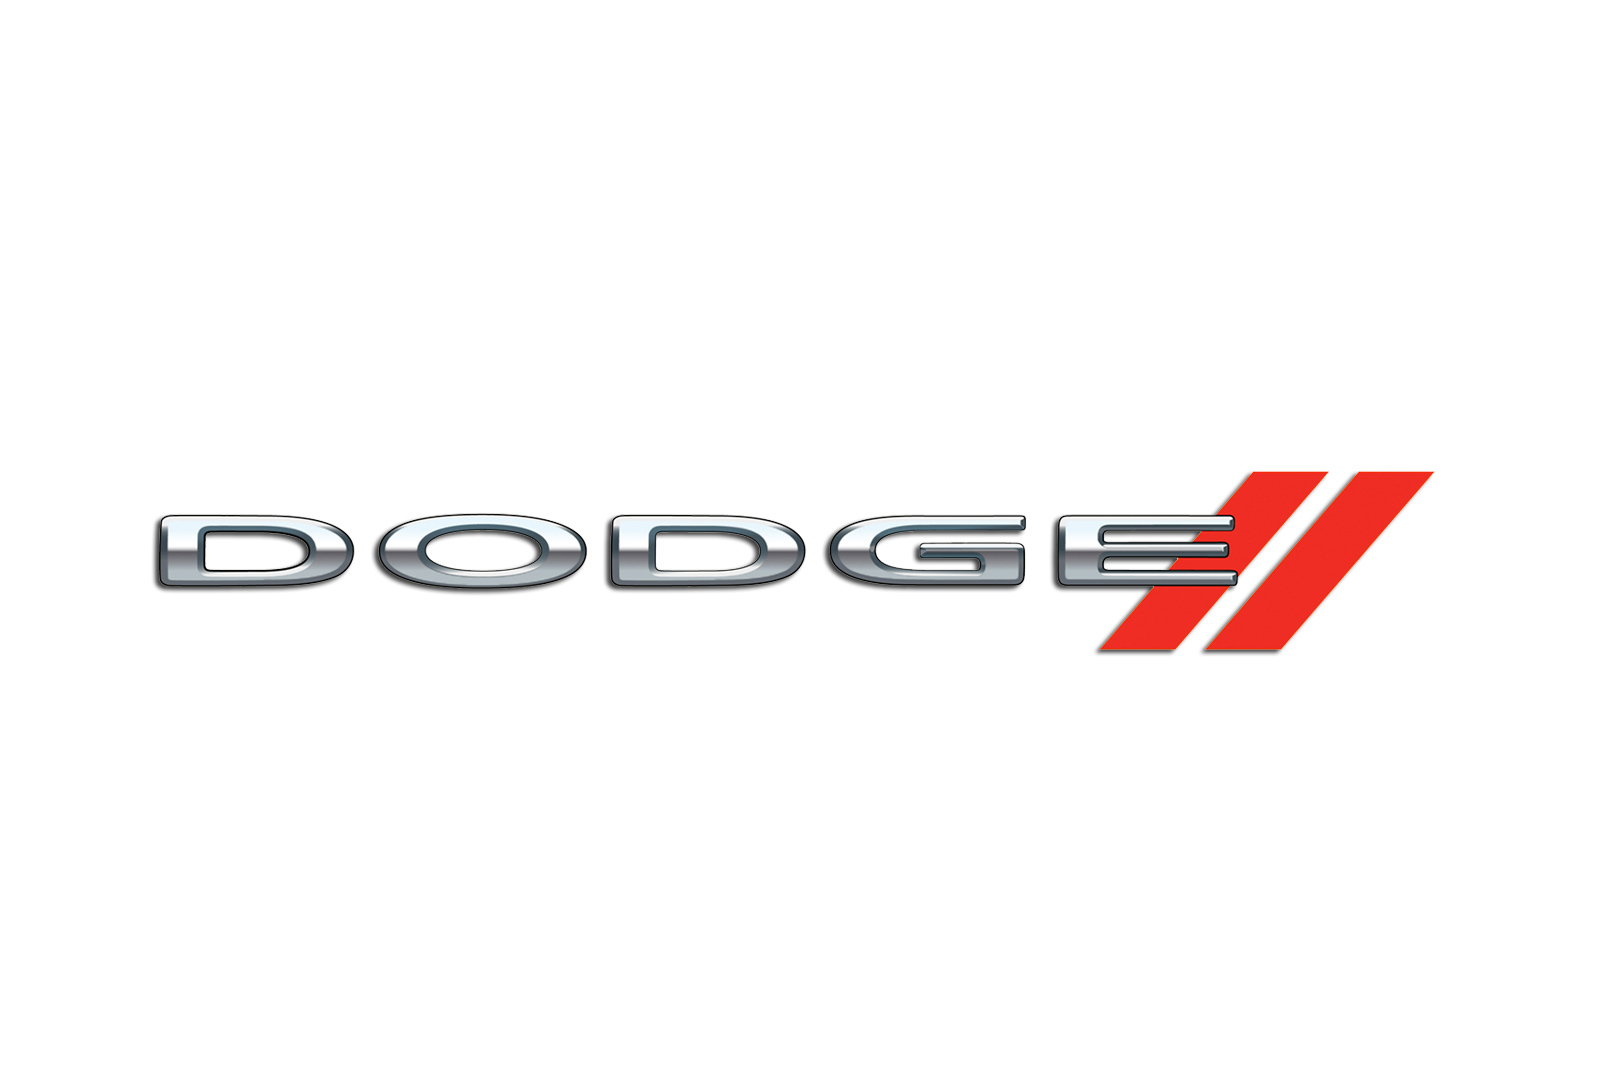 http://www.car-brand-names.com/wp-content/uploads/2015/09/Dodge-emblem-2.jpg